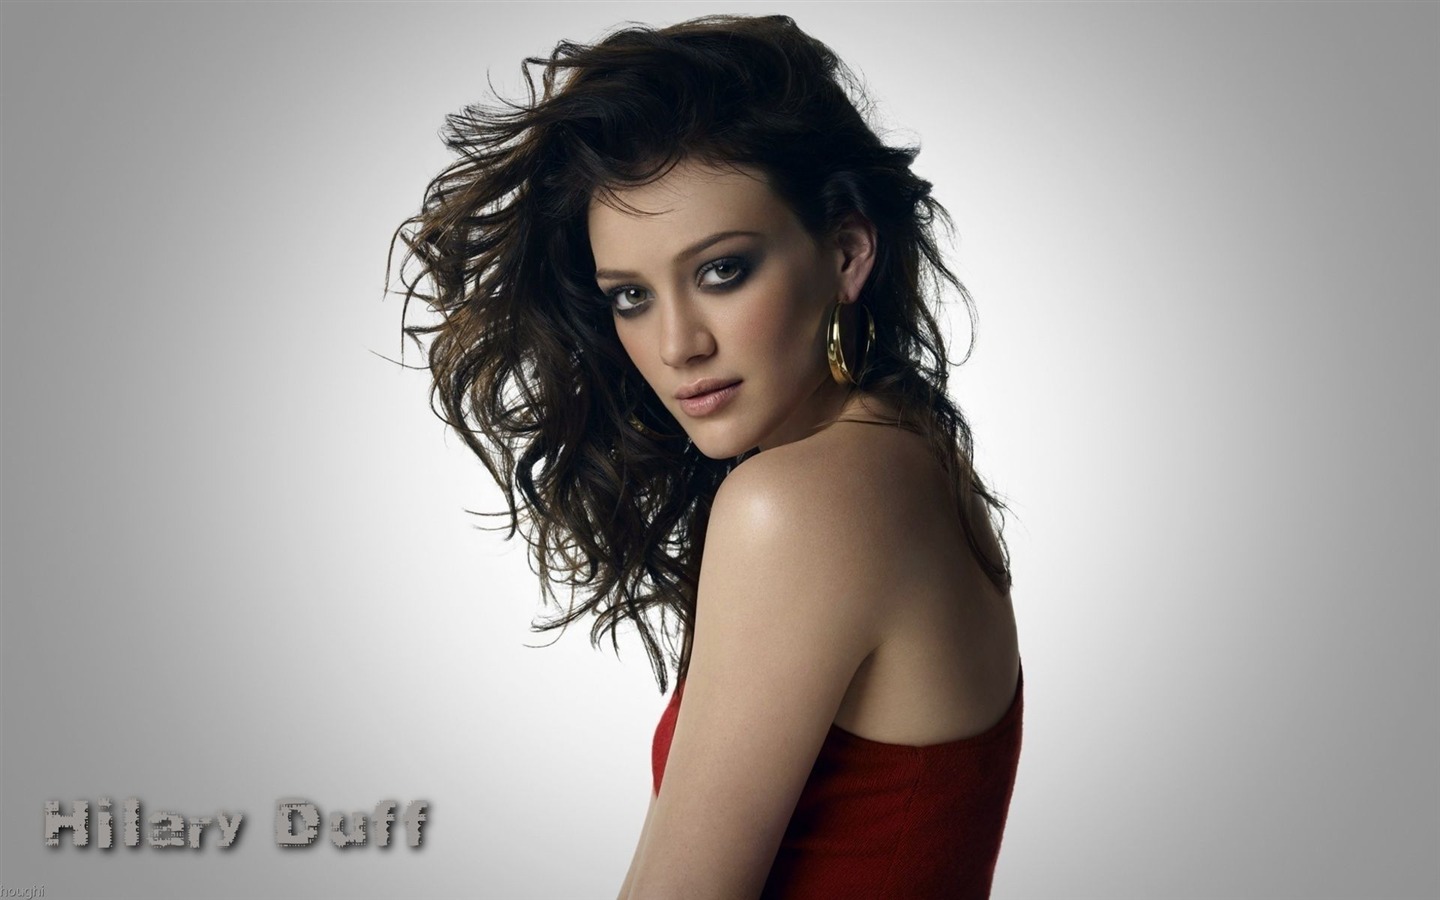 Hilary Duff 아름다운 벽지 #21 - 1440x900